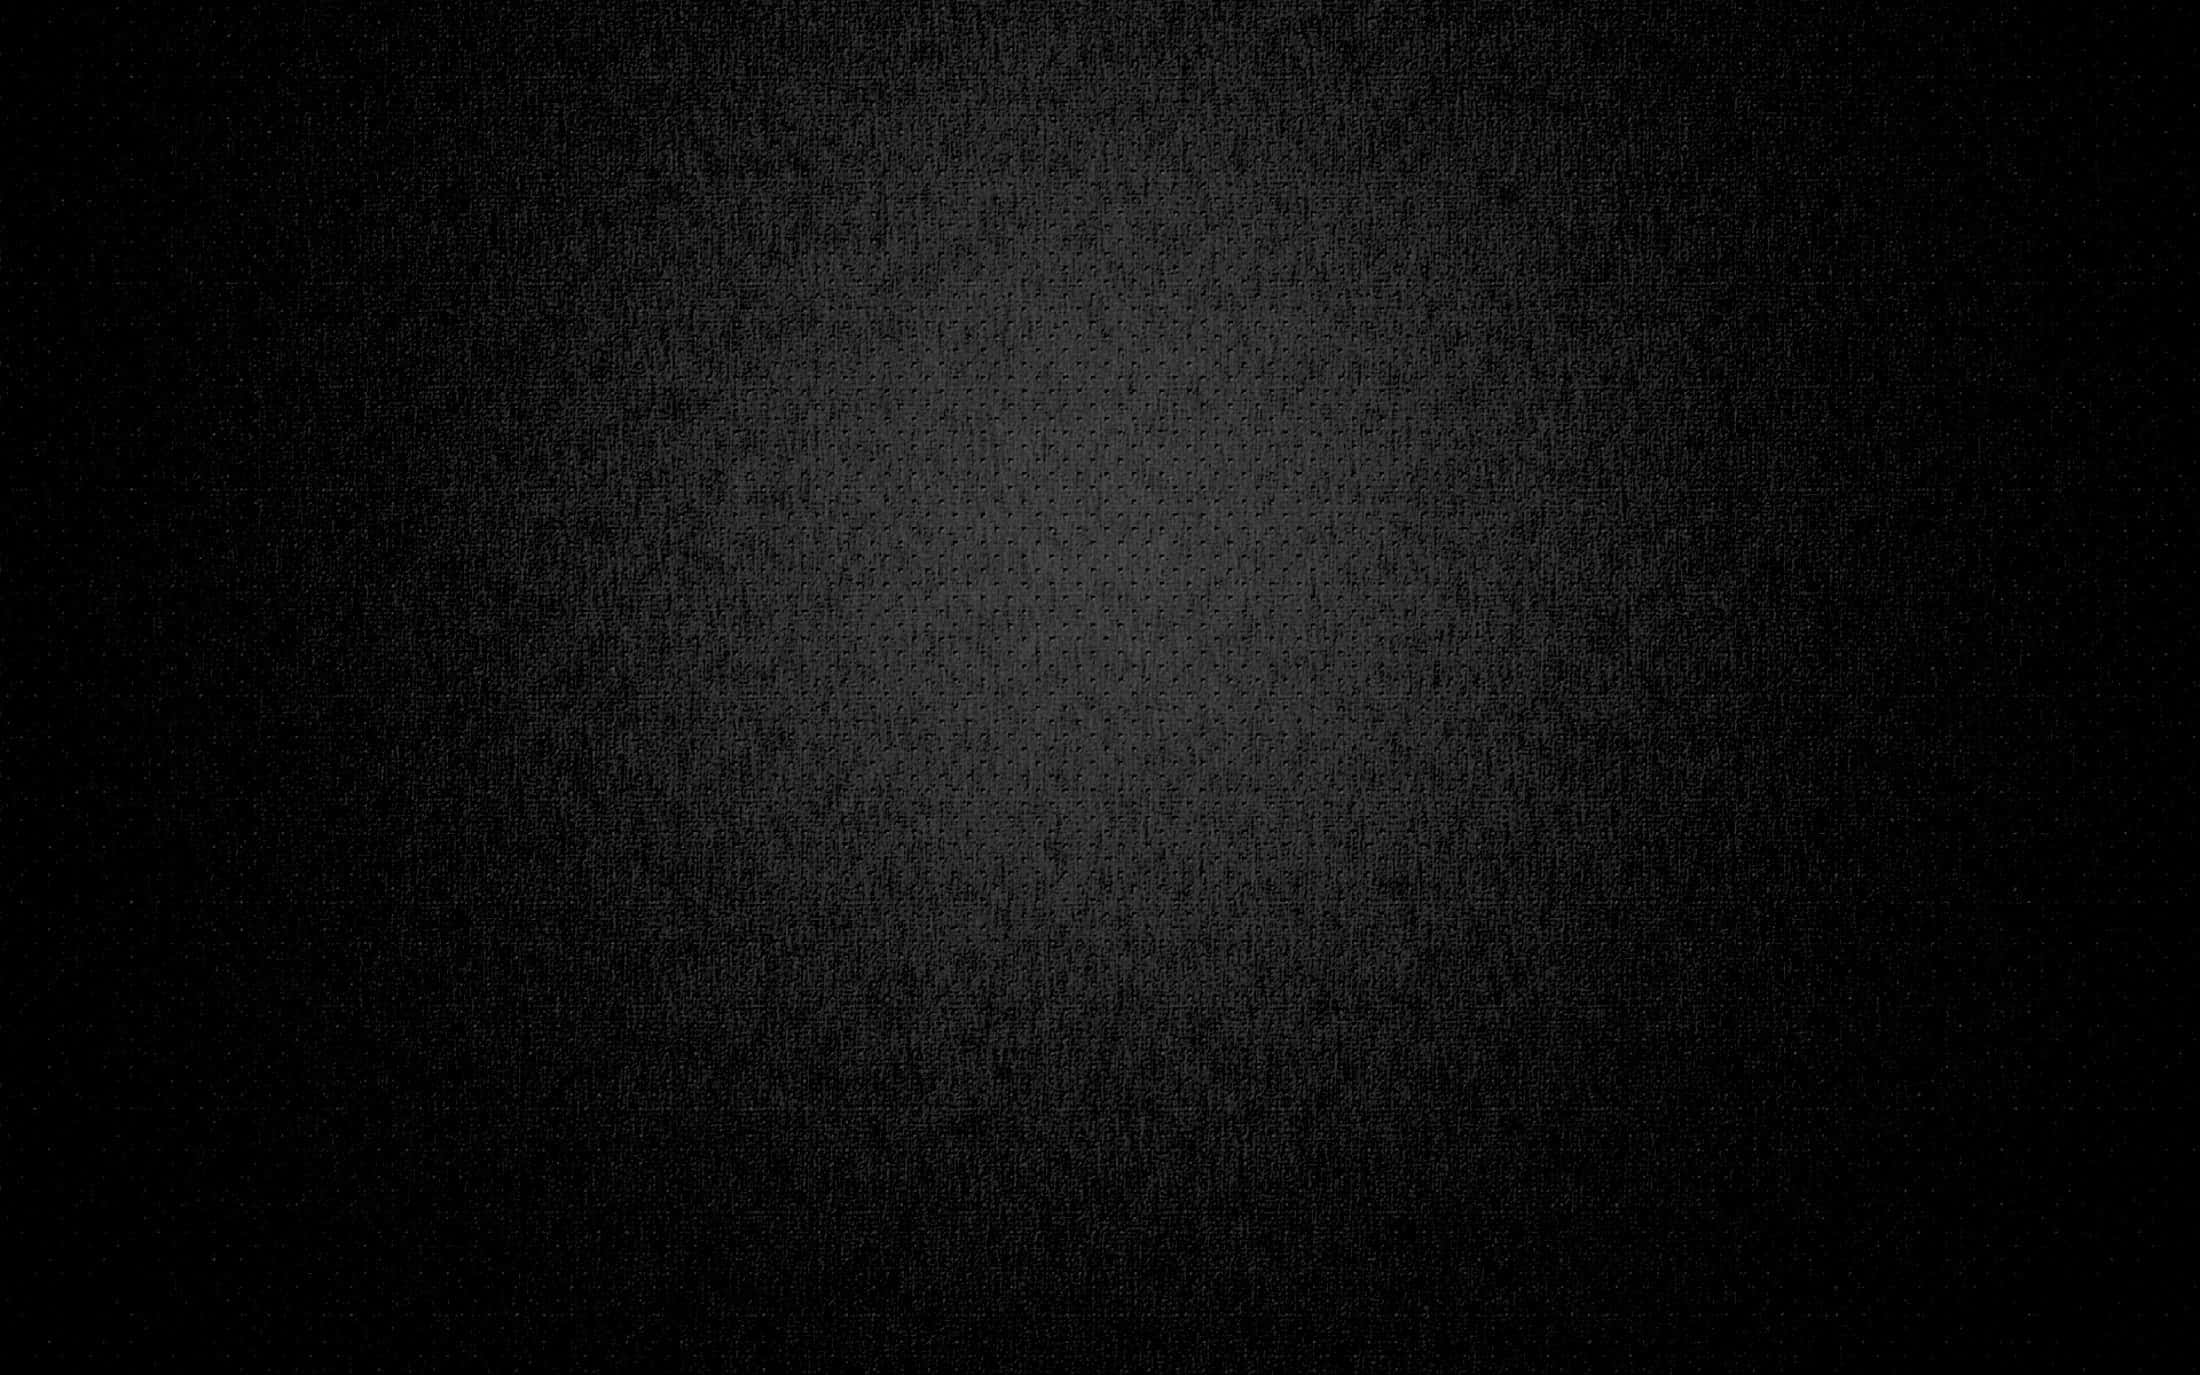 Black Gradient Background iPhone Wallpaper  iPhone Wallpapers